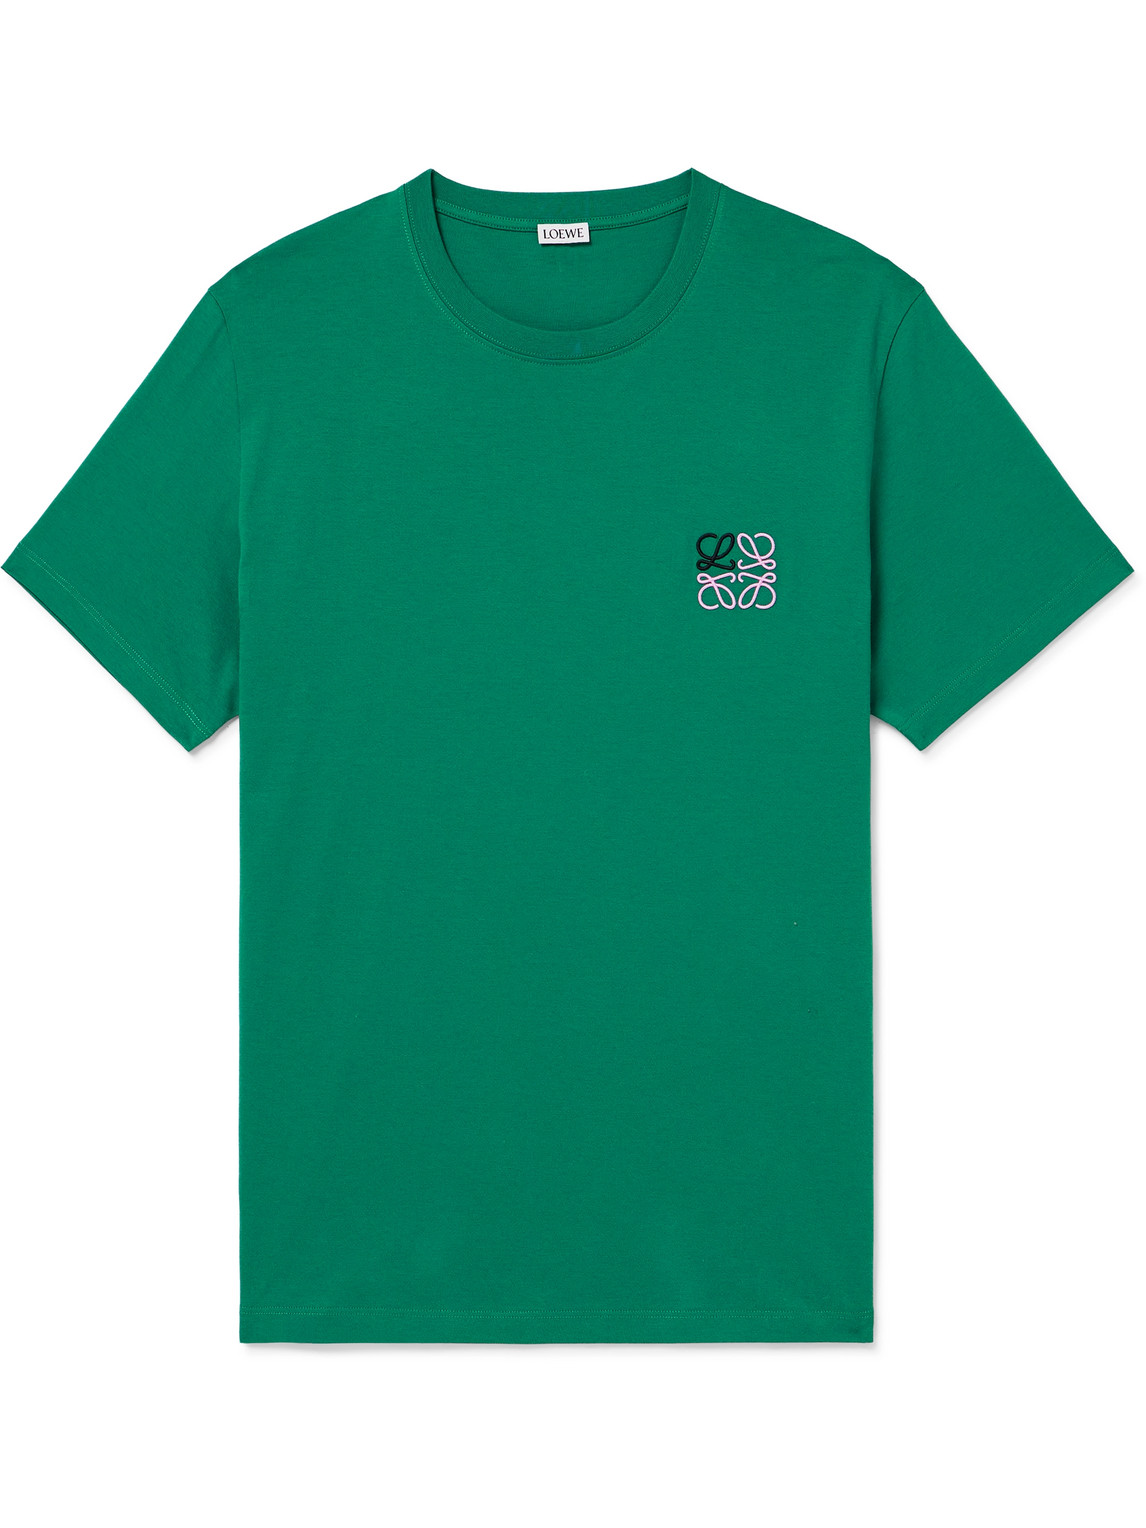 LOEWE - Logo-Embroidered Cotton-Jersey T-Shirt - Men - Green - XXS von LOEWE